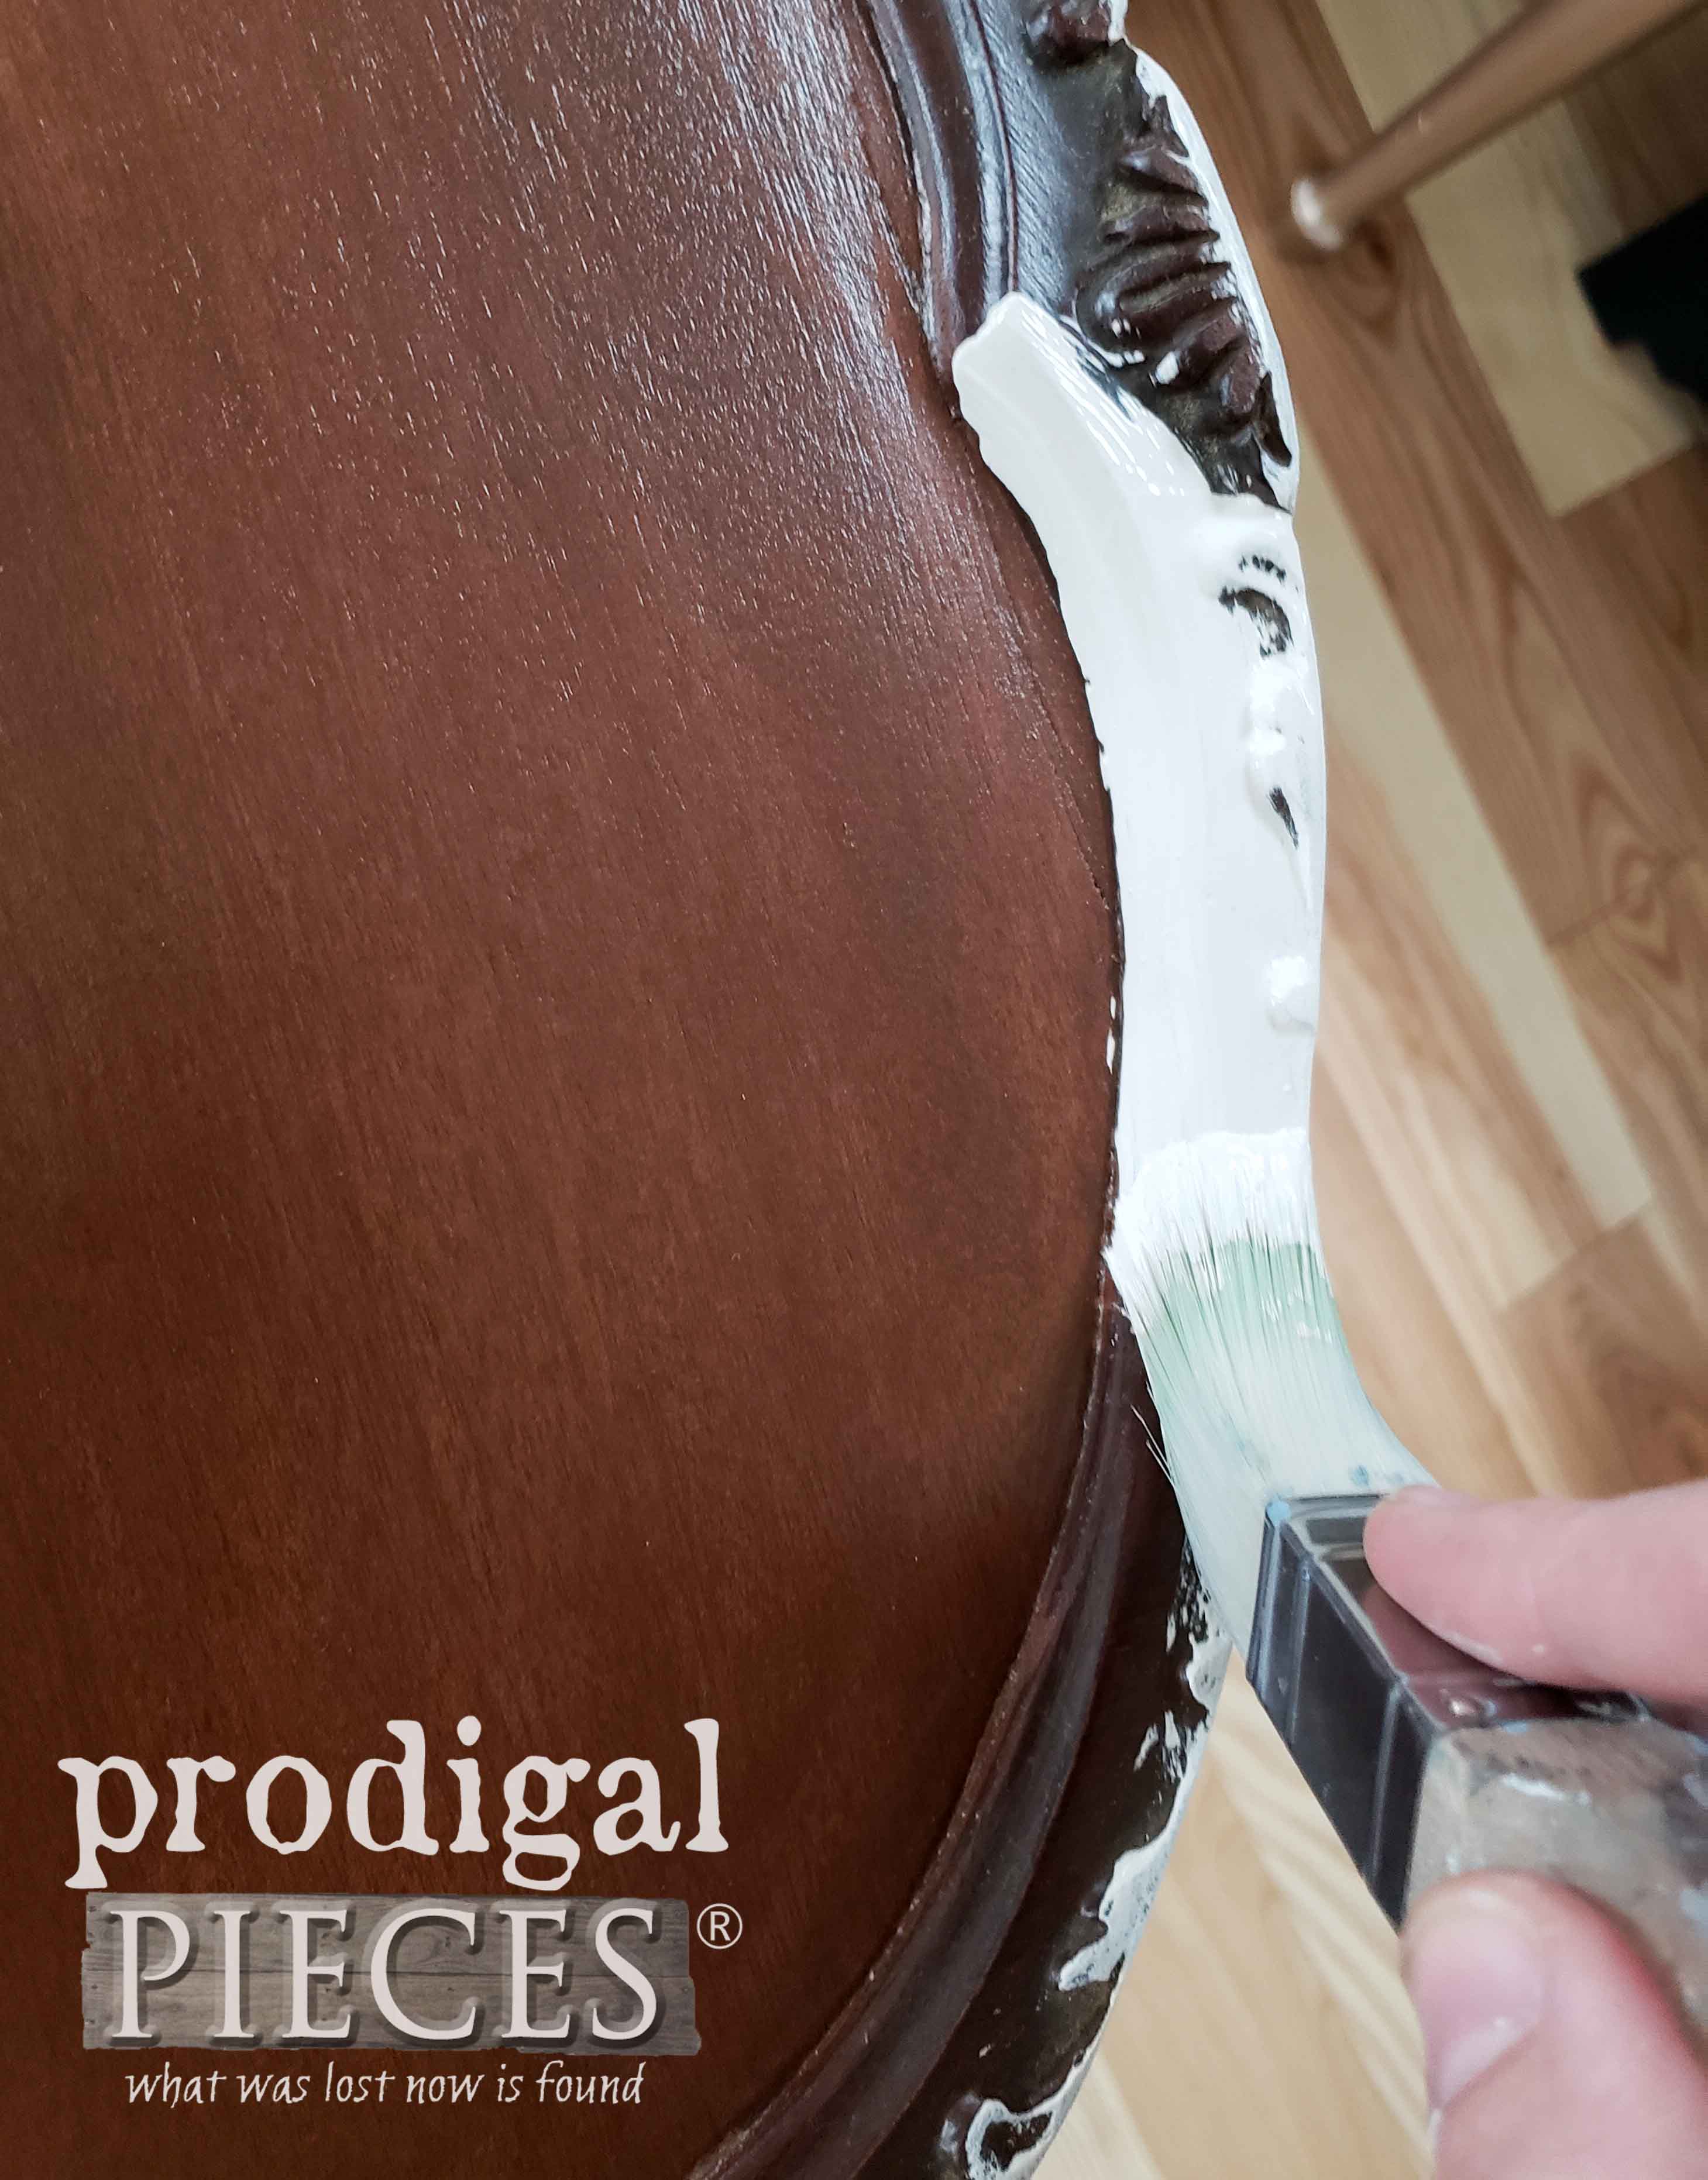 Painting Antique Pie Crust Table Edge | Brushes available at shop.prodiaglpieces.com